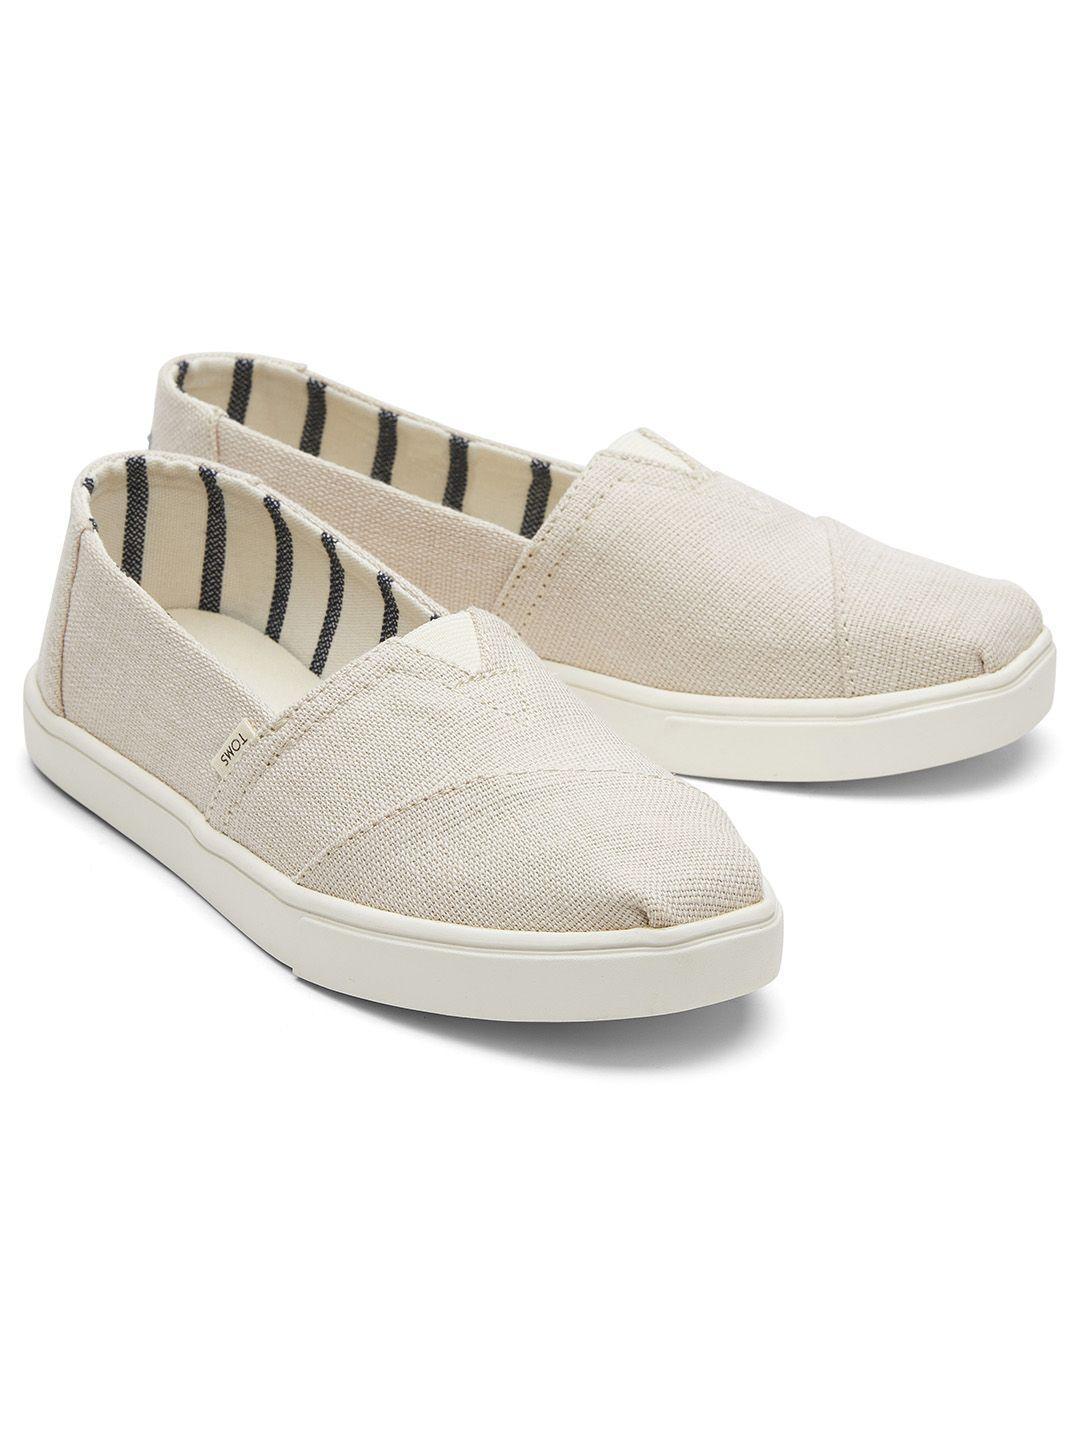 toms-women-beige-solid-slip-on-sneakers